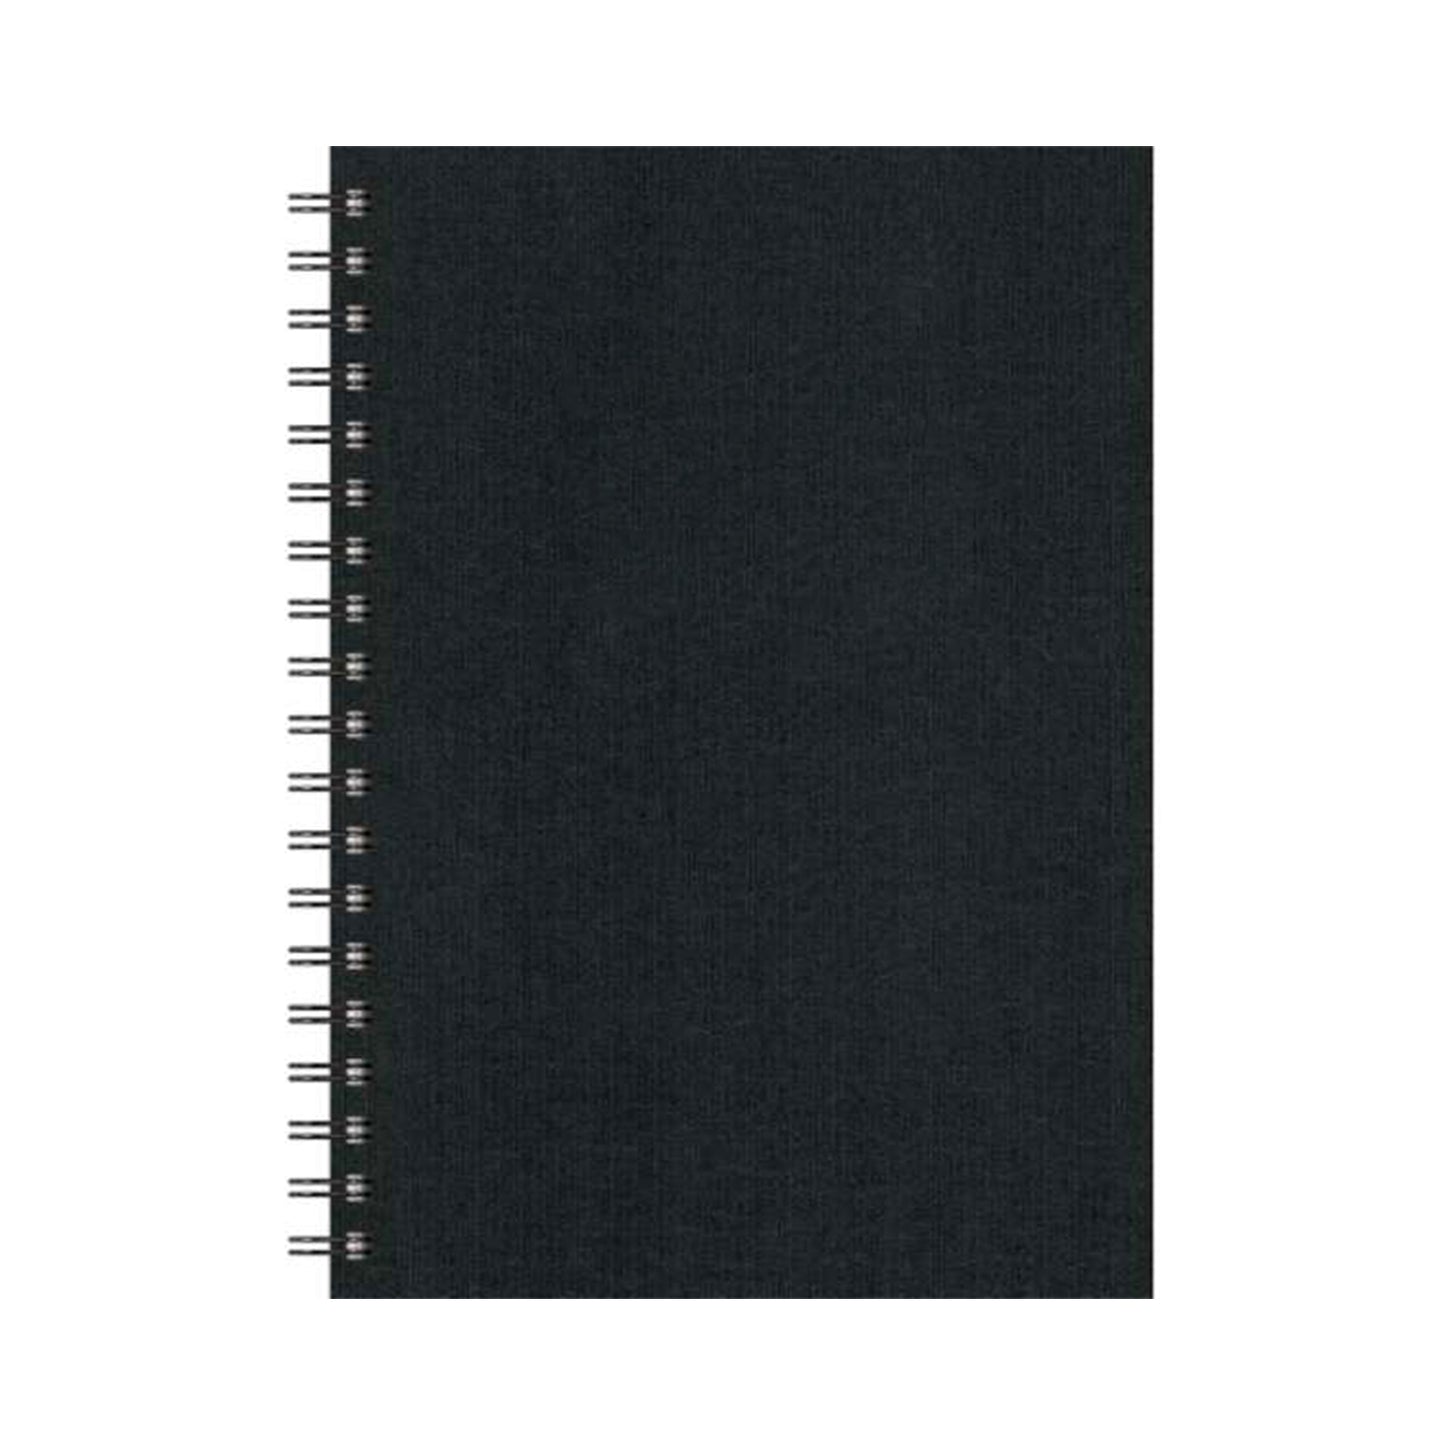 7"  x 10" Spiral Bound Notebook - 100 Sheets